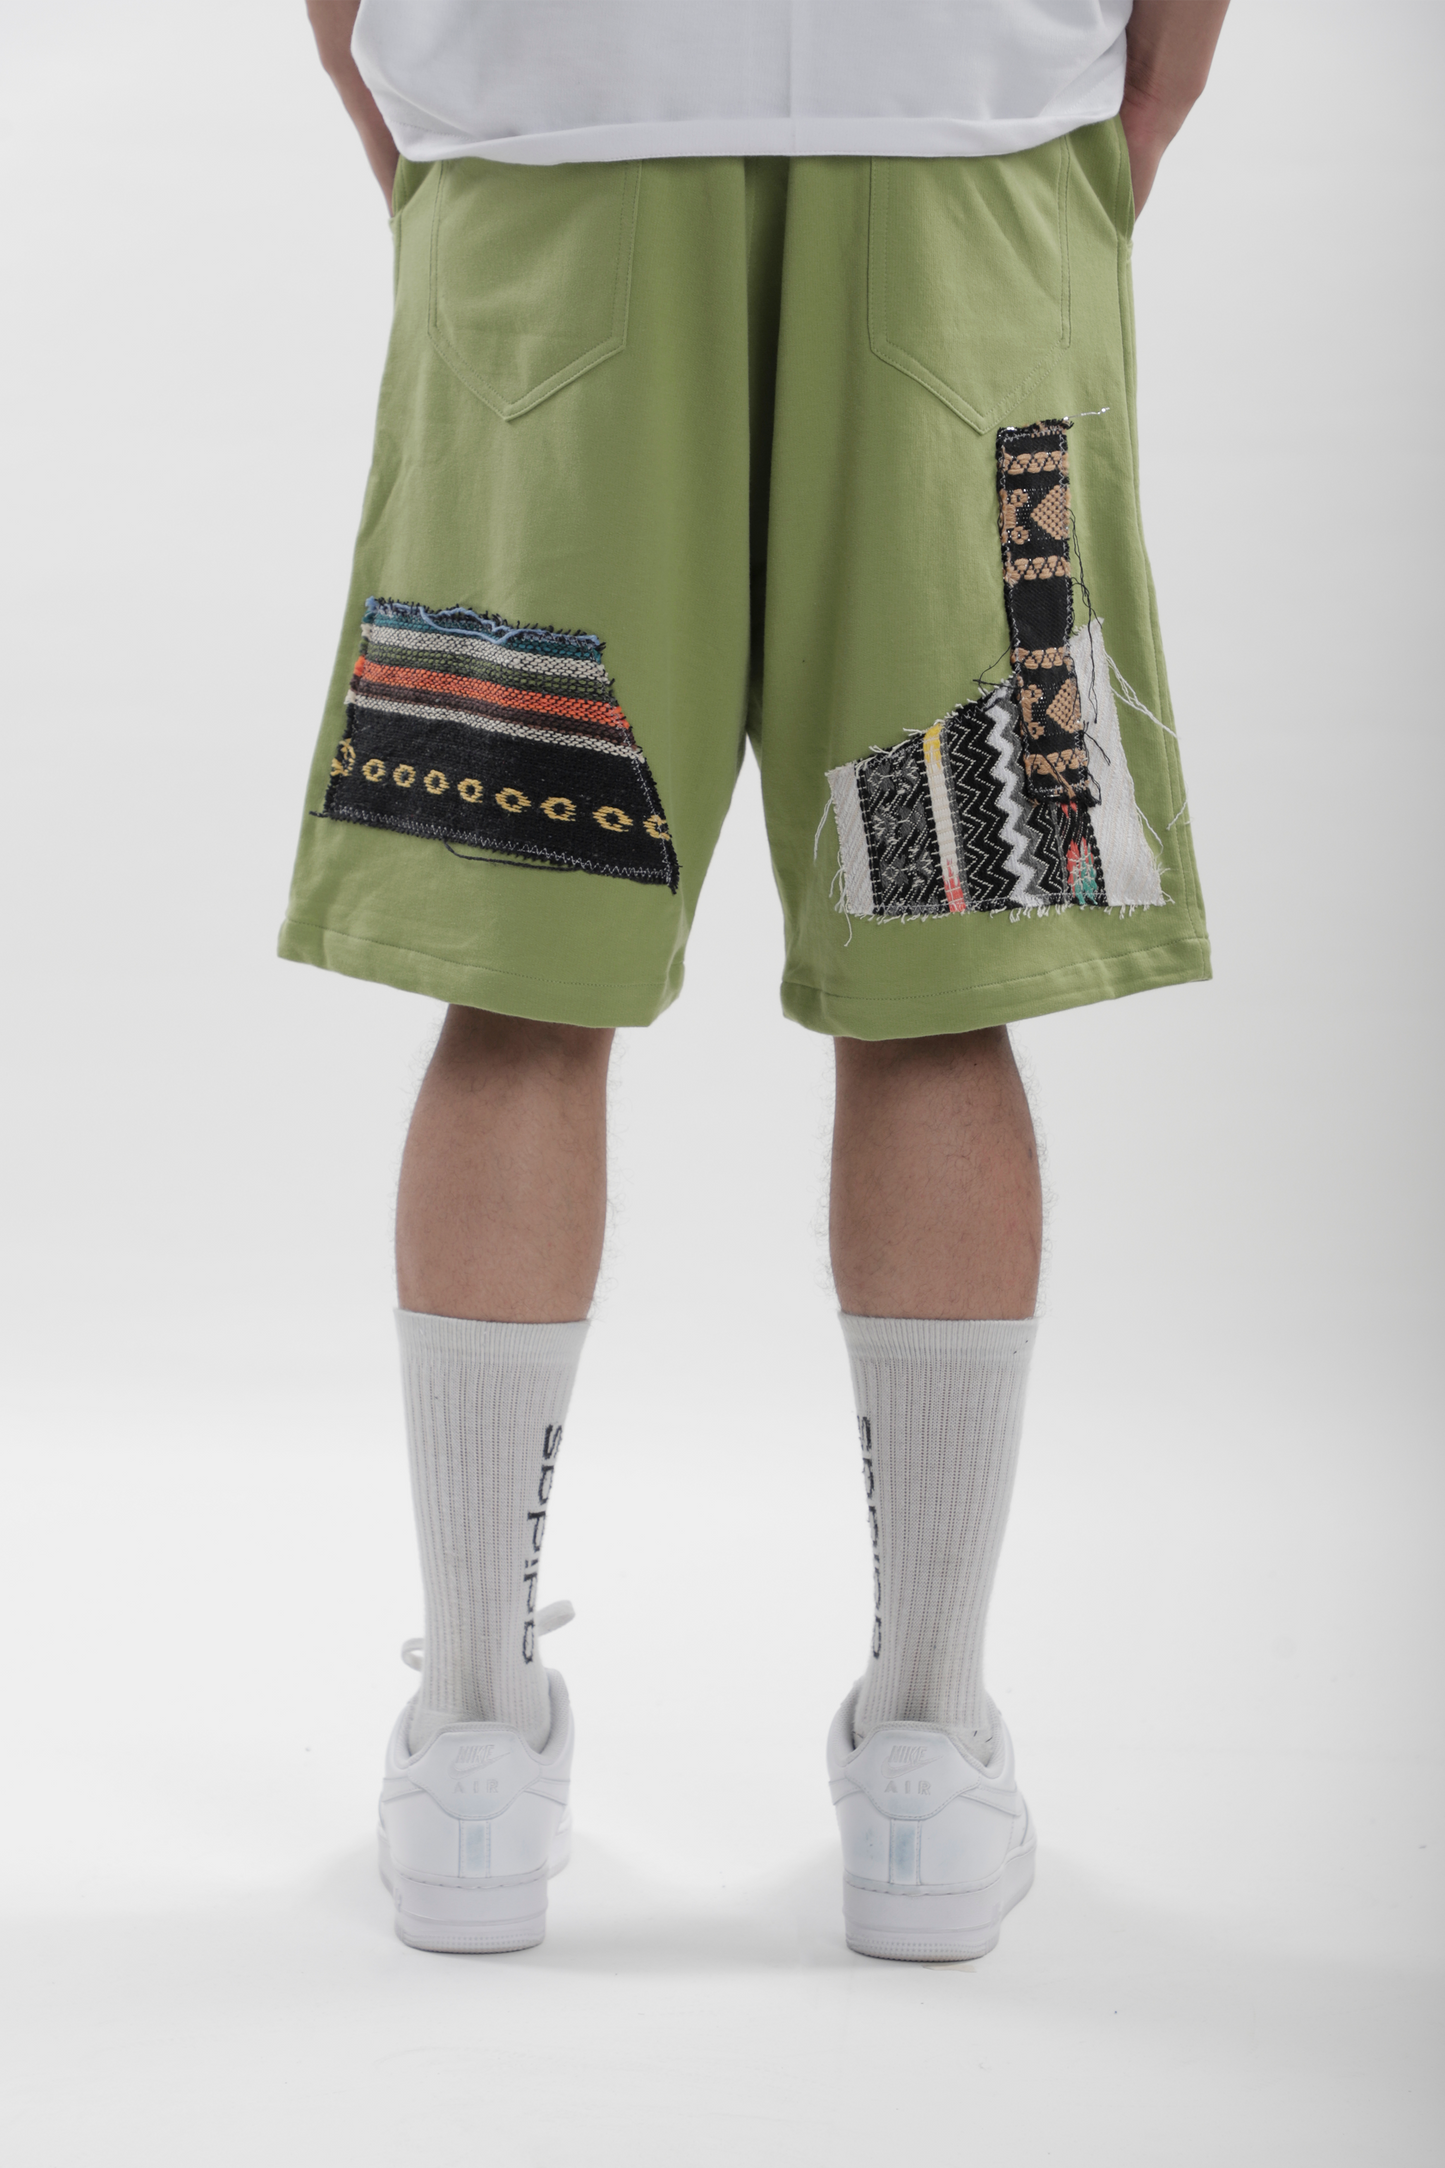 Artistic Stitched Shorts